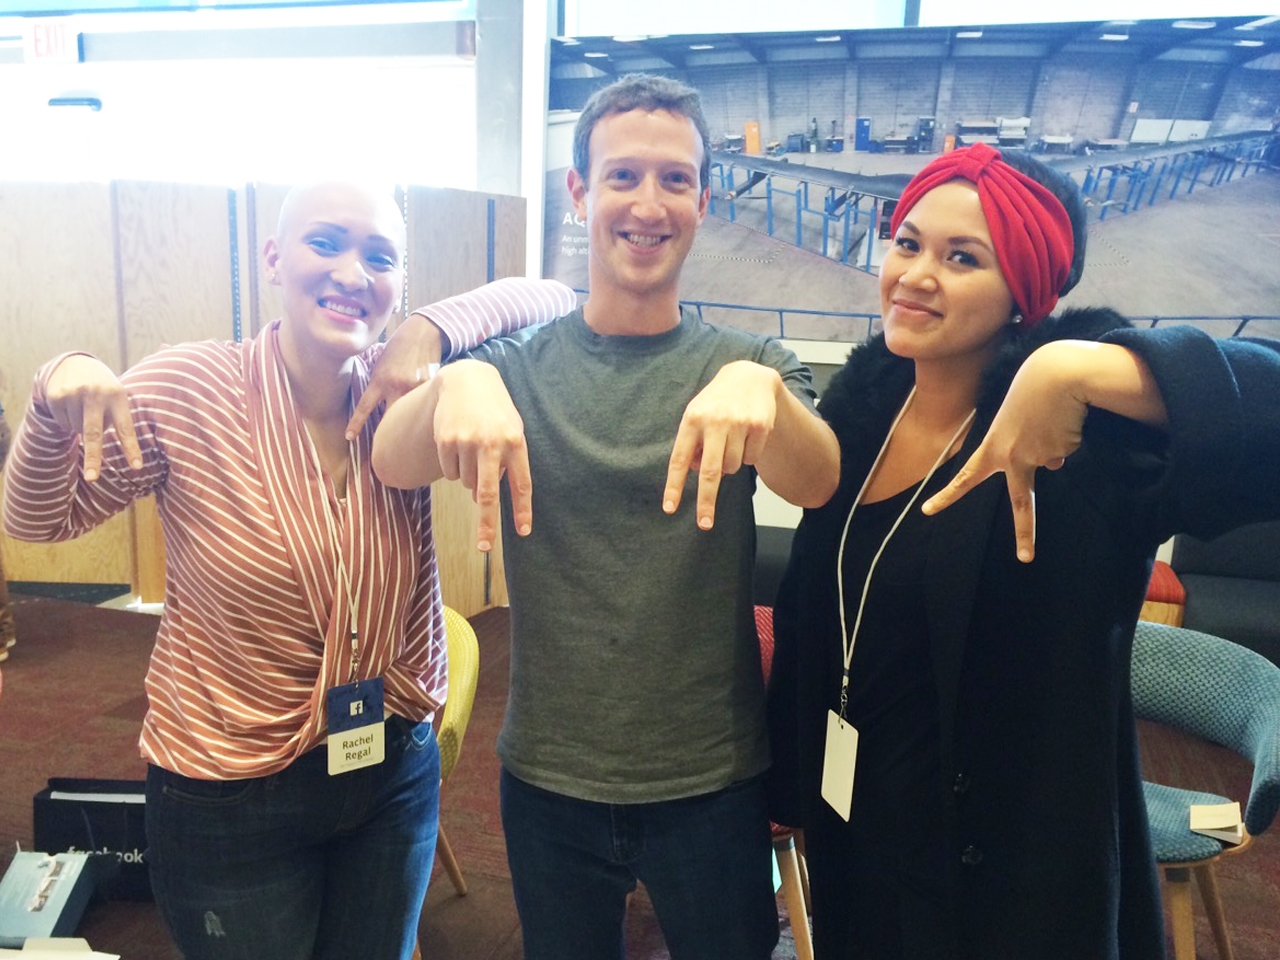 Alopecia awareness advocate Abby Asistio meets Mark Zuckerberg